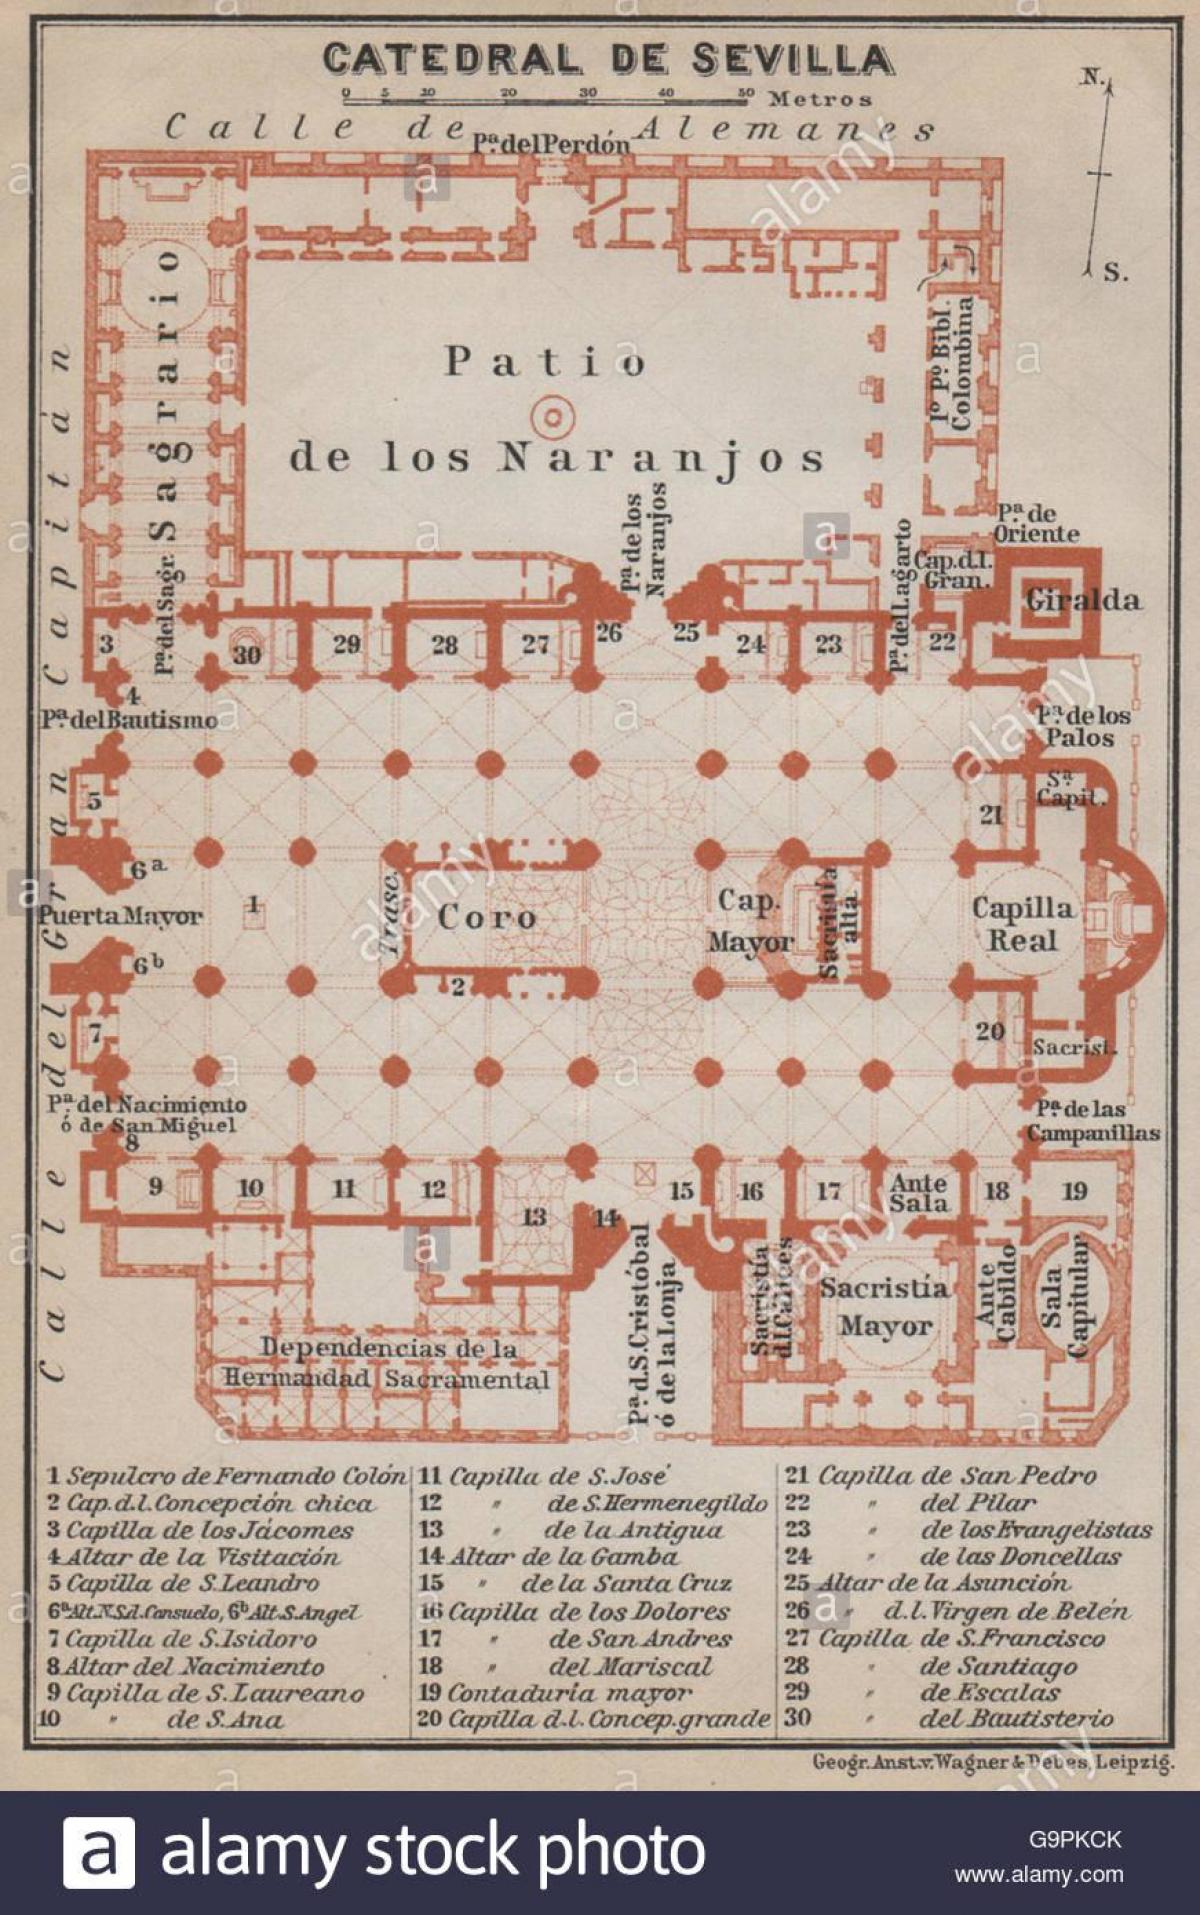 Sevilla Katedrali haritası 